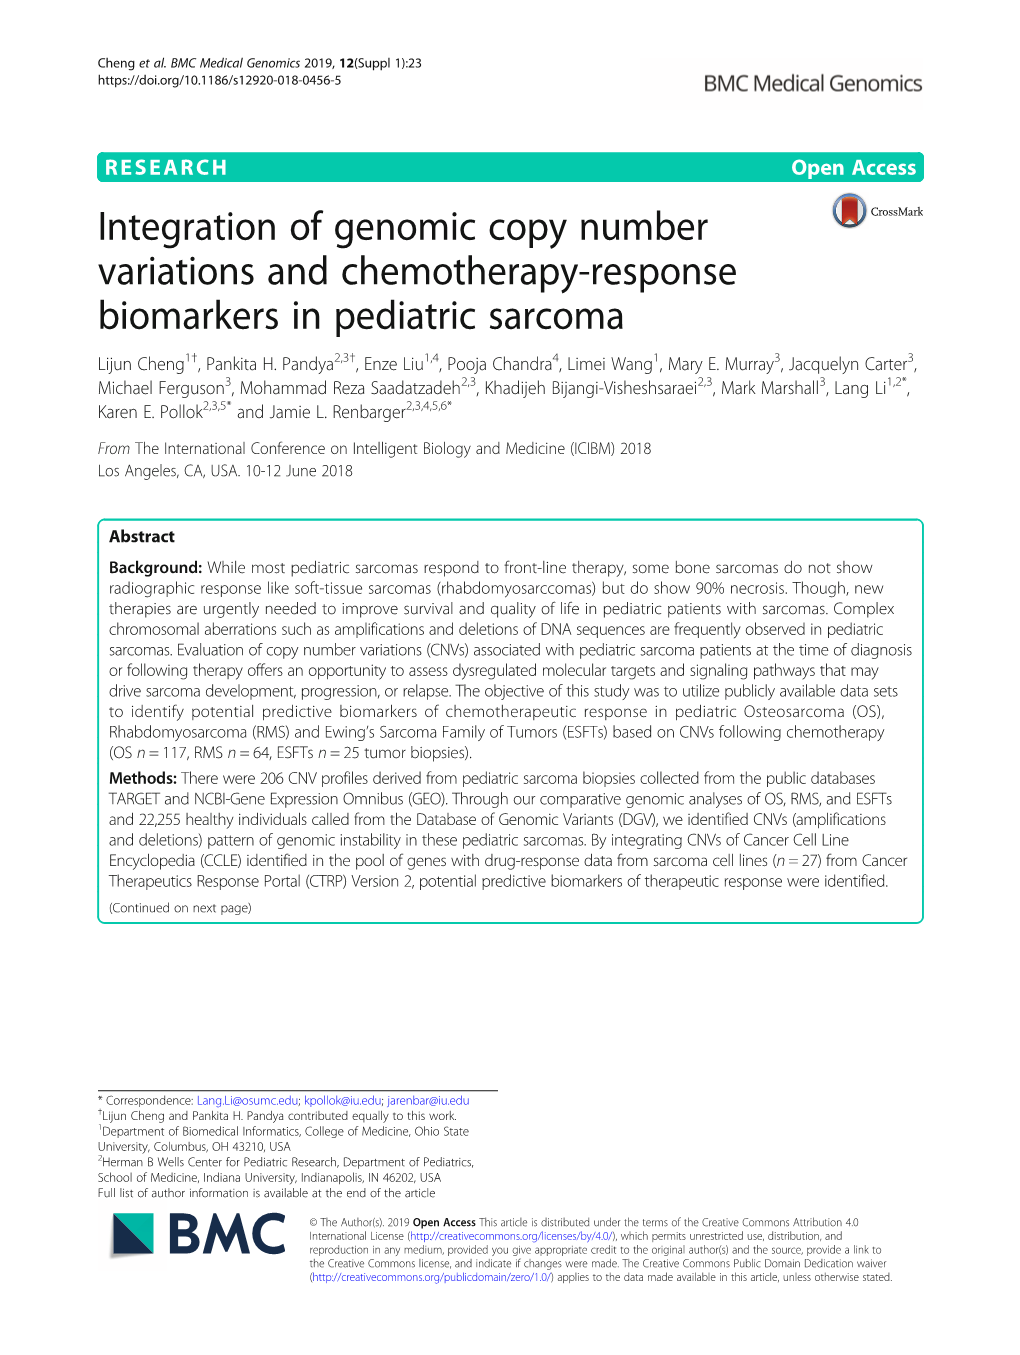 Integration of Genomic Copy Number Variations and Chemotherapy-Response Biomarkers in Pediatric Sarcoma Lijun Cheng1†, Pankita H